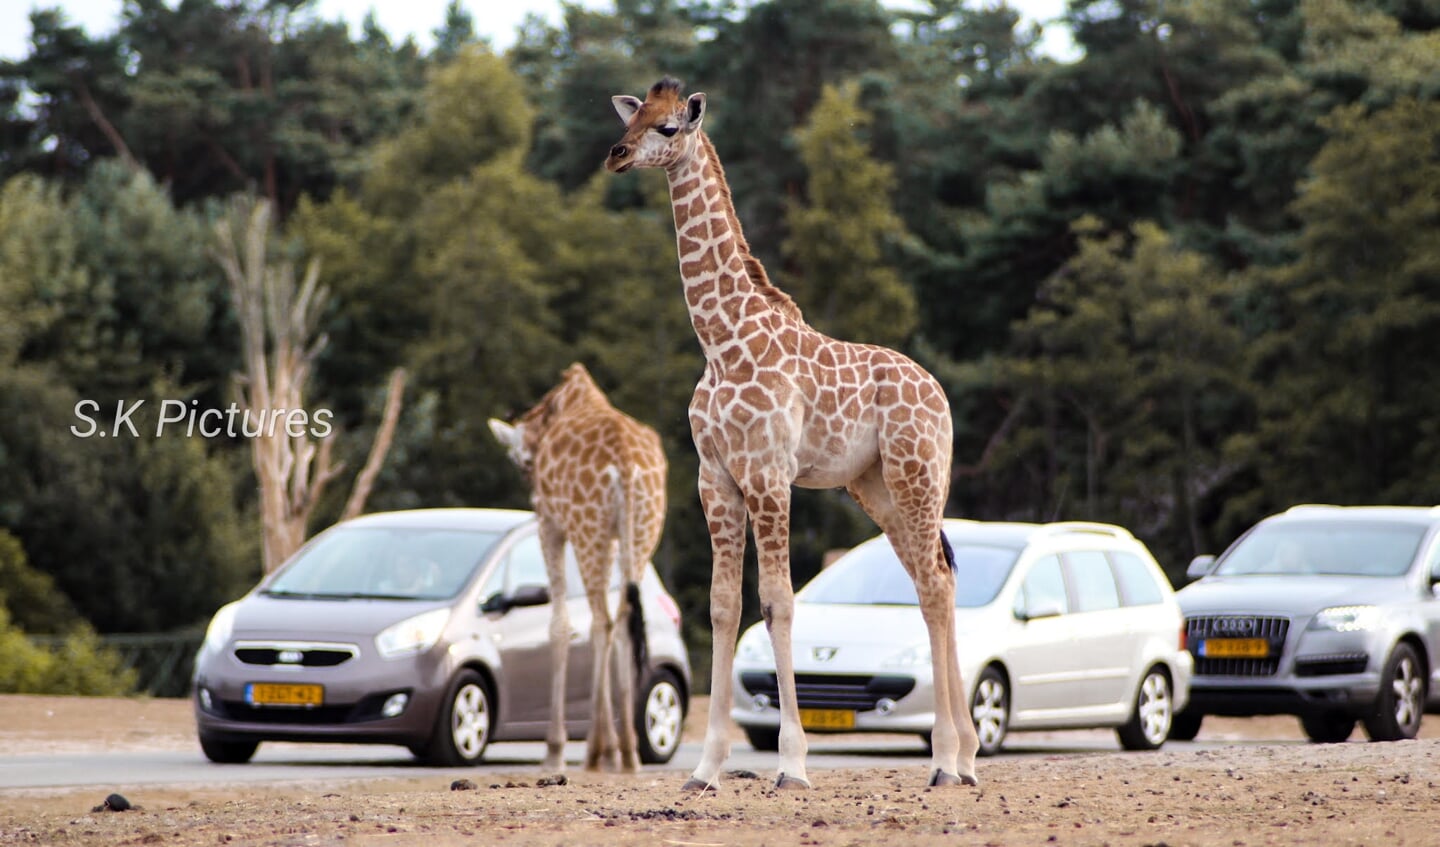 Interactie tussen mens en dier, Safaripark Beekse Bergen.